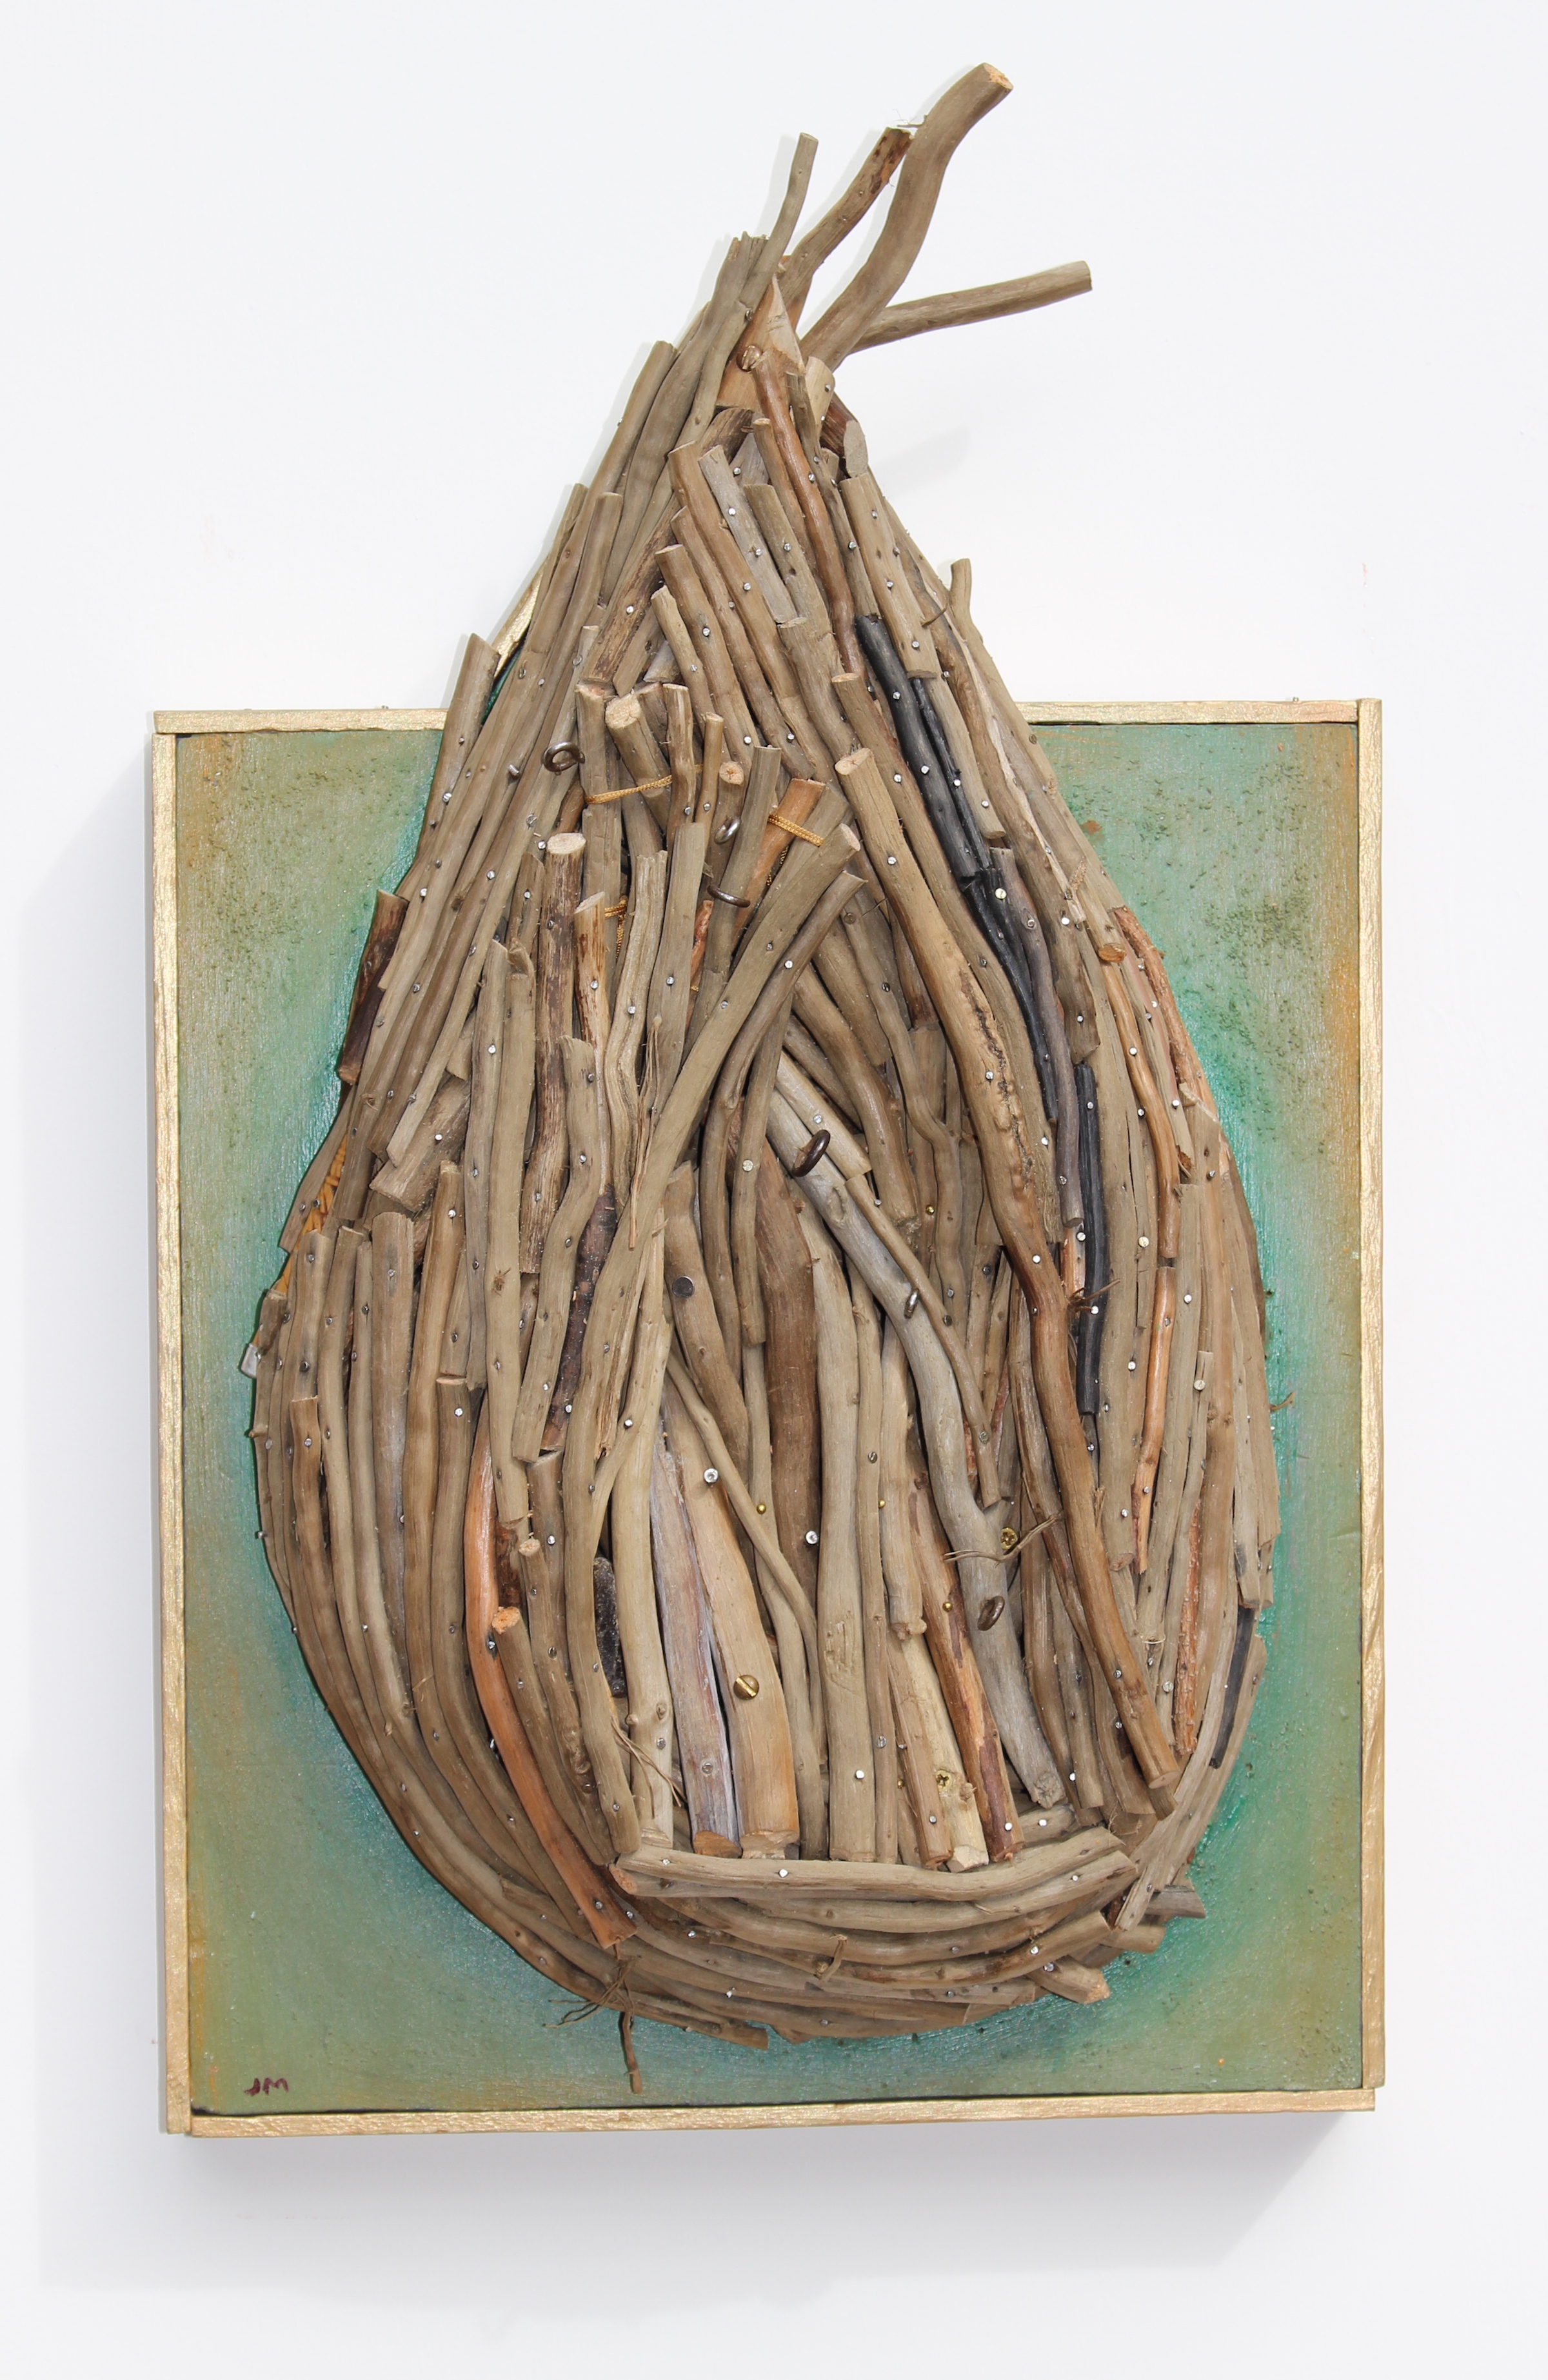  Joel Moskowitz,  “Roots 2”   Wood sculpture, 20 x 12 x 4.5 inches 